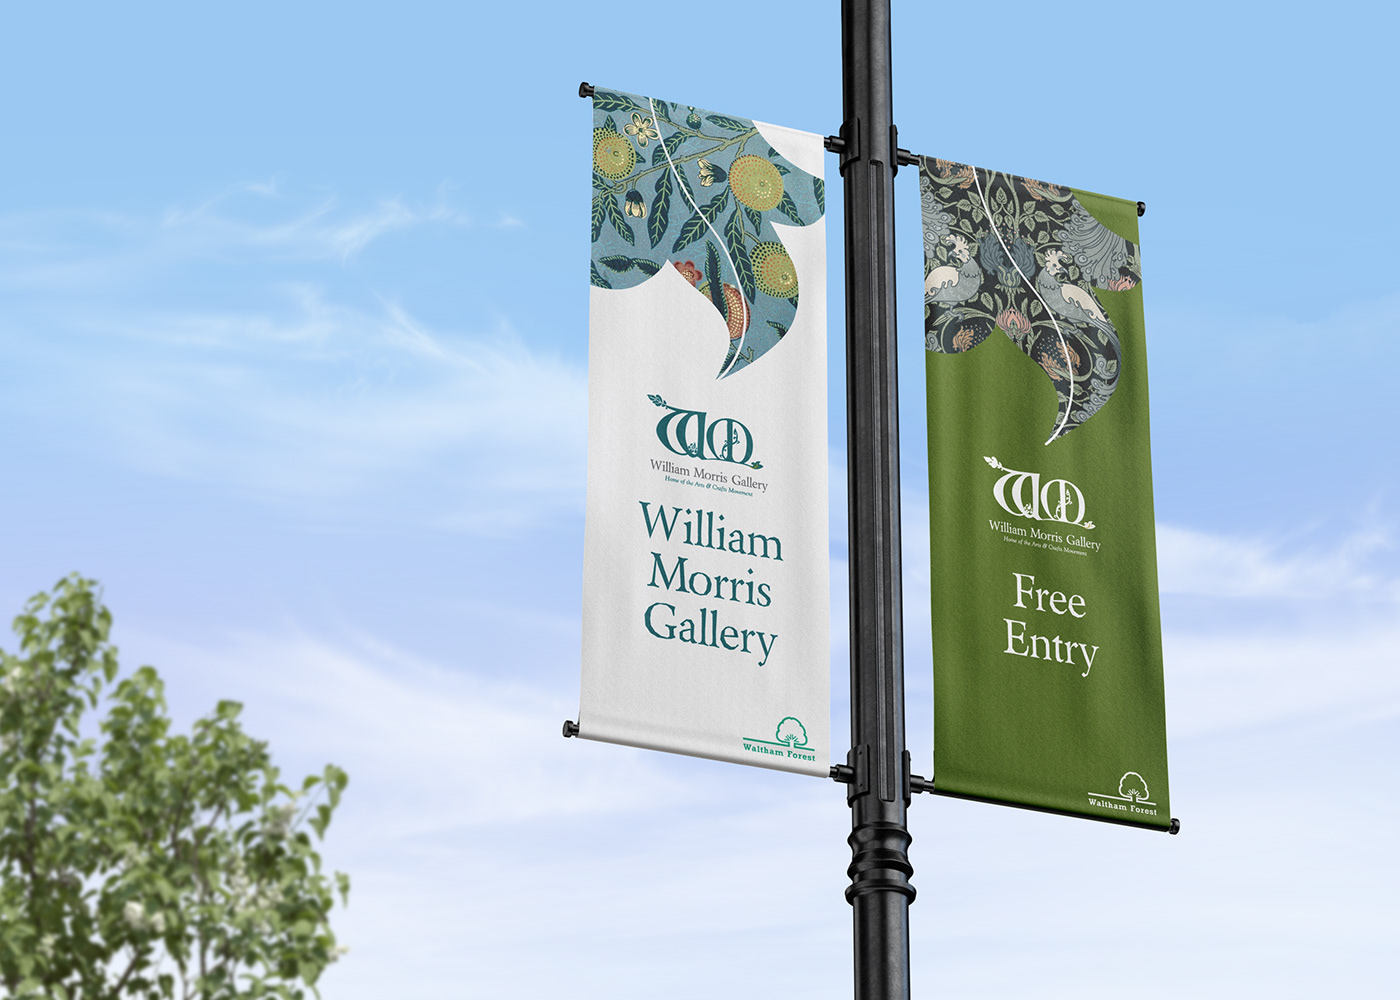 William Morris Gallery Lamp Post Banners